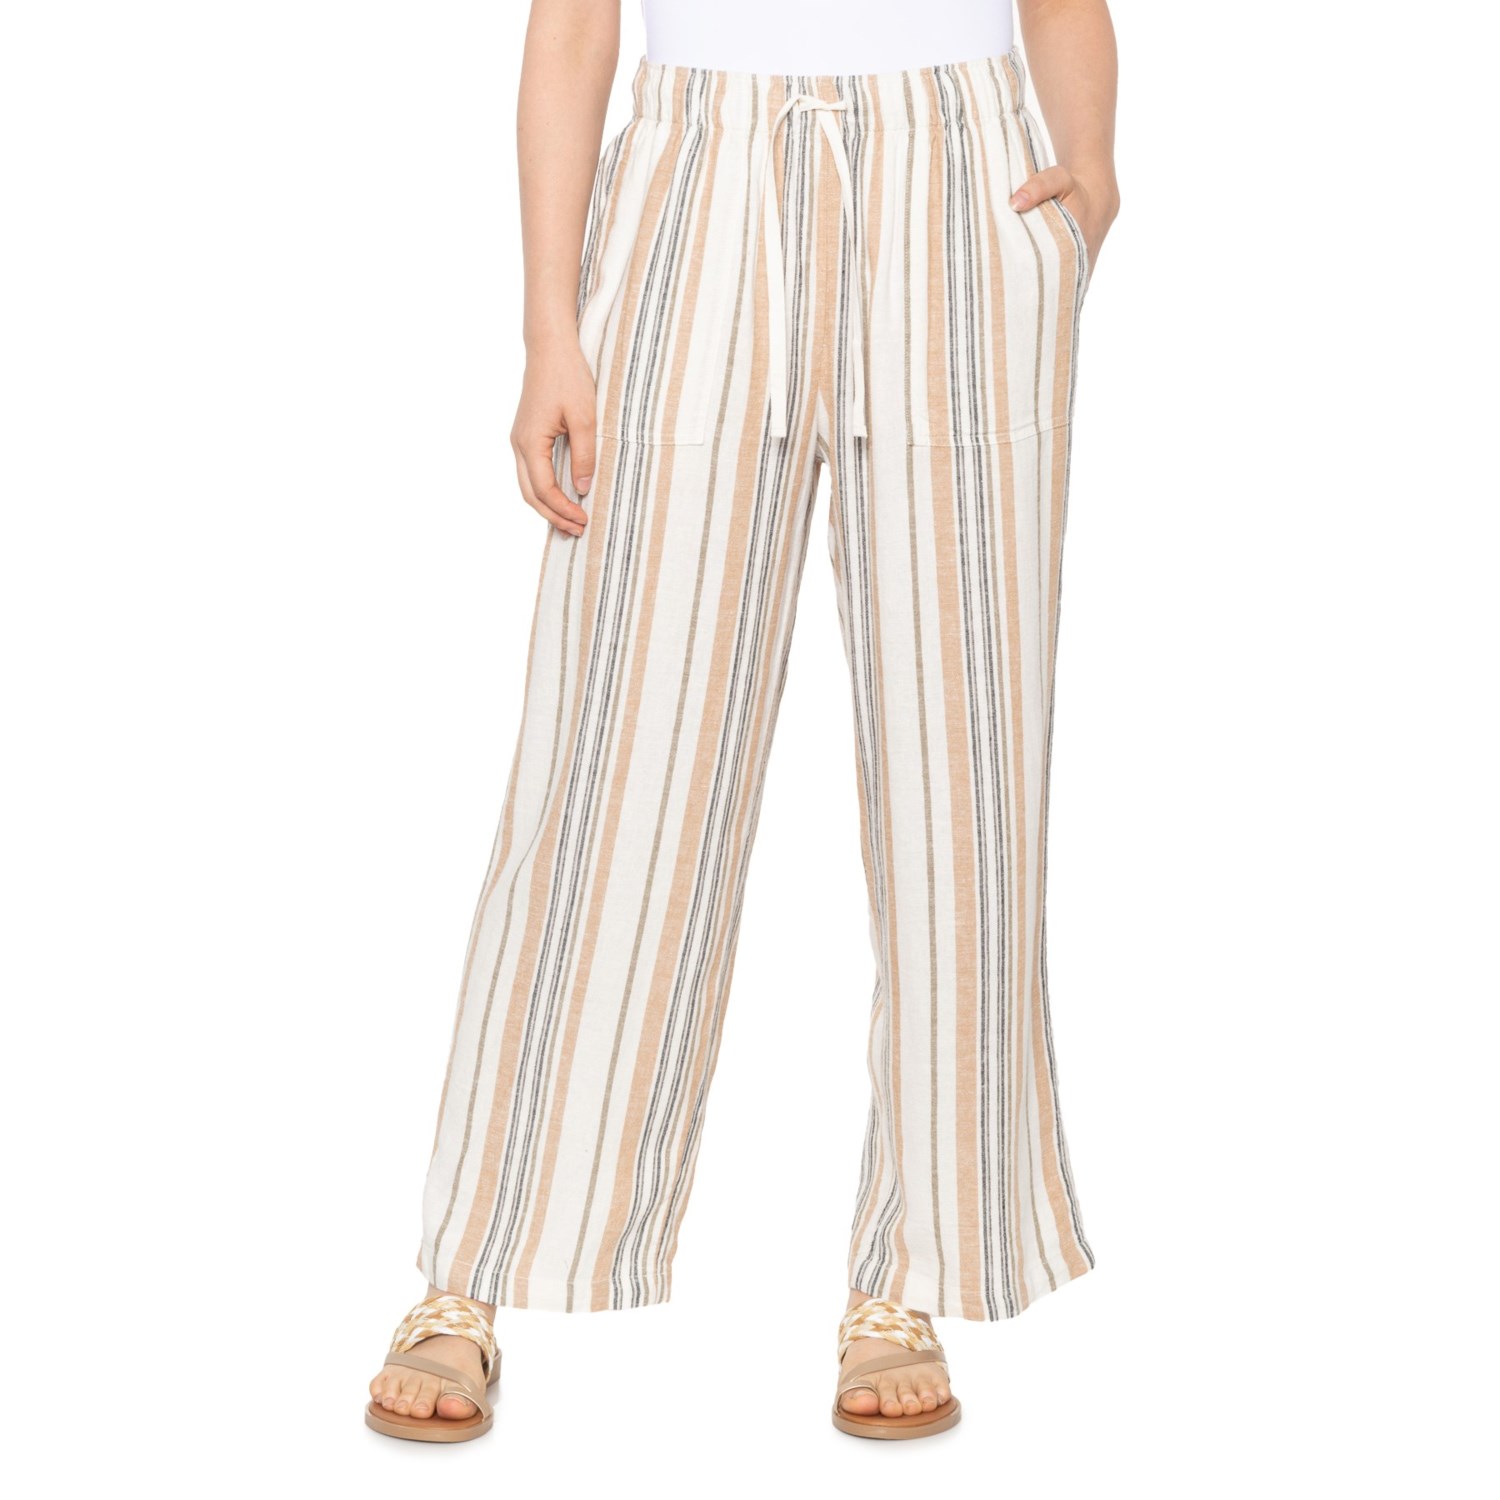 Lucky Brand Striped Pull-On Wide-Leg Pants - Linen